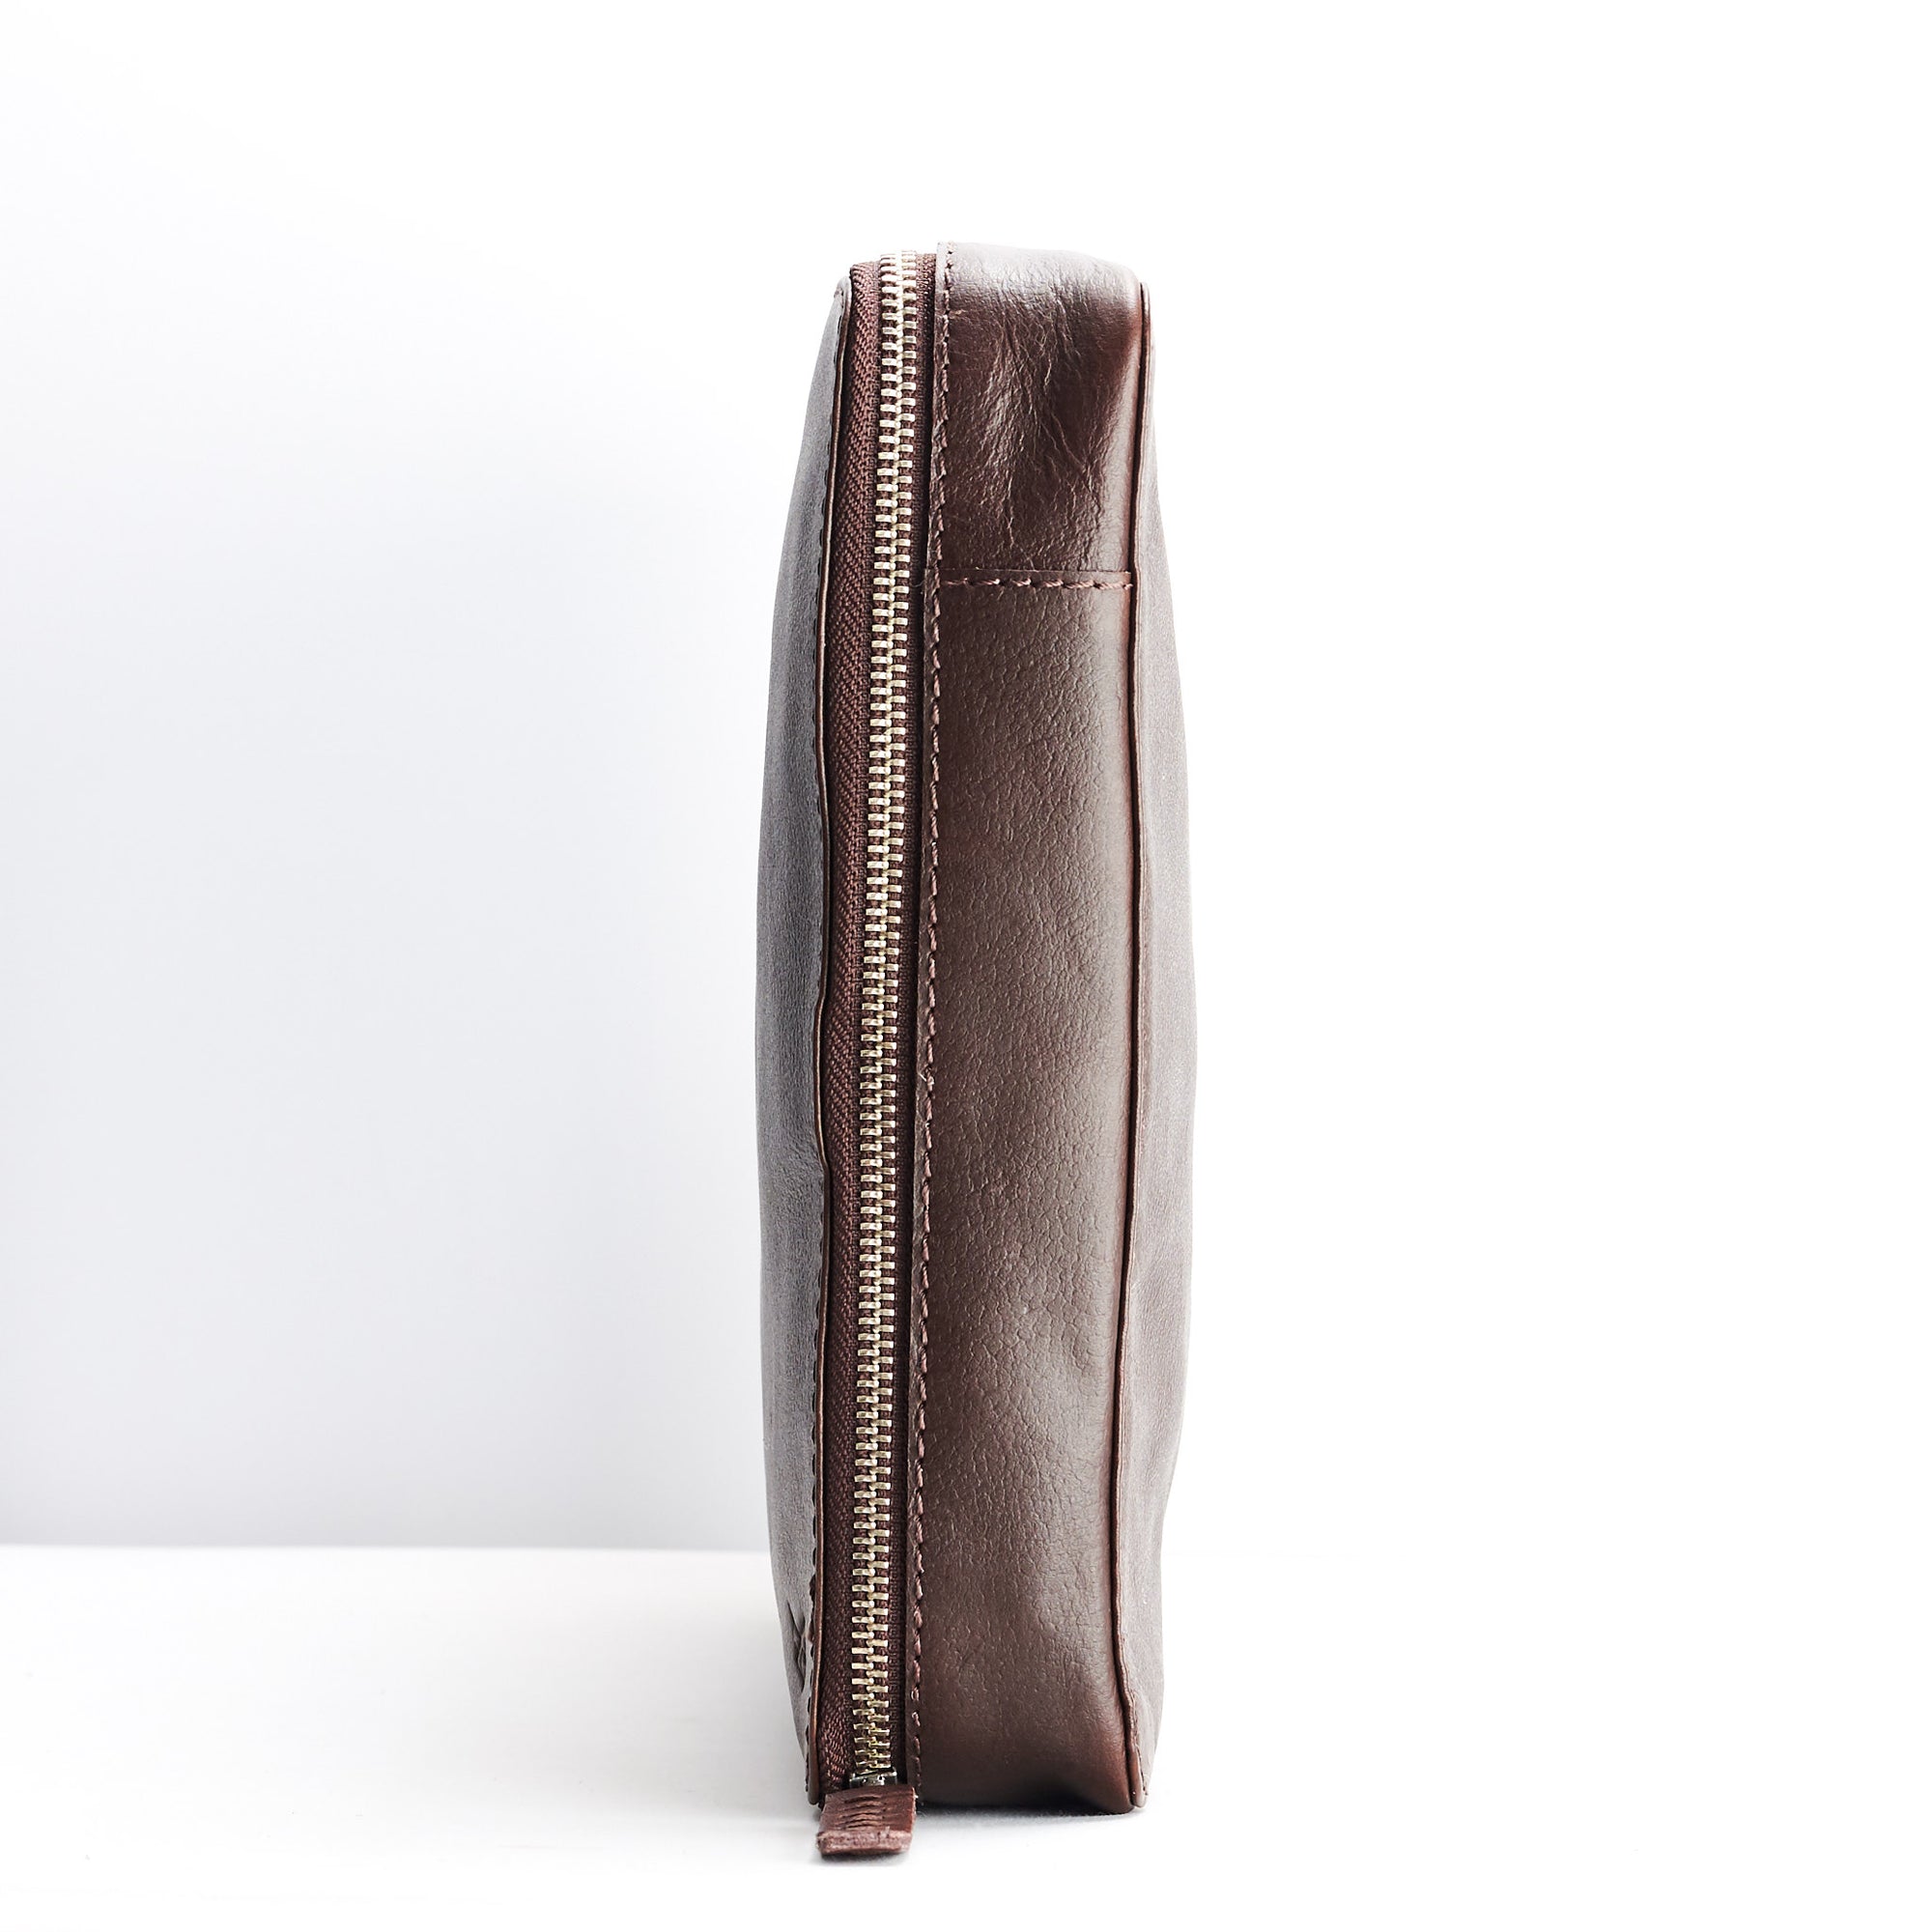 Slim profile. Dark brown travel gadget organizer by Capra Leather